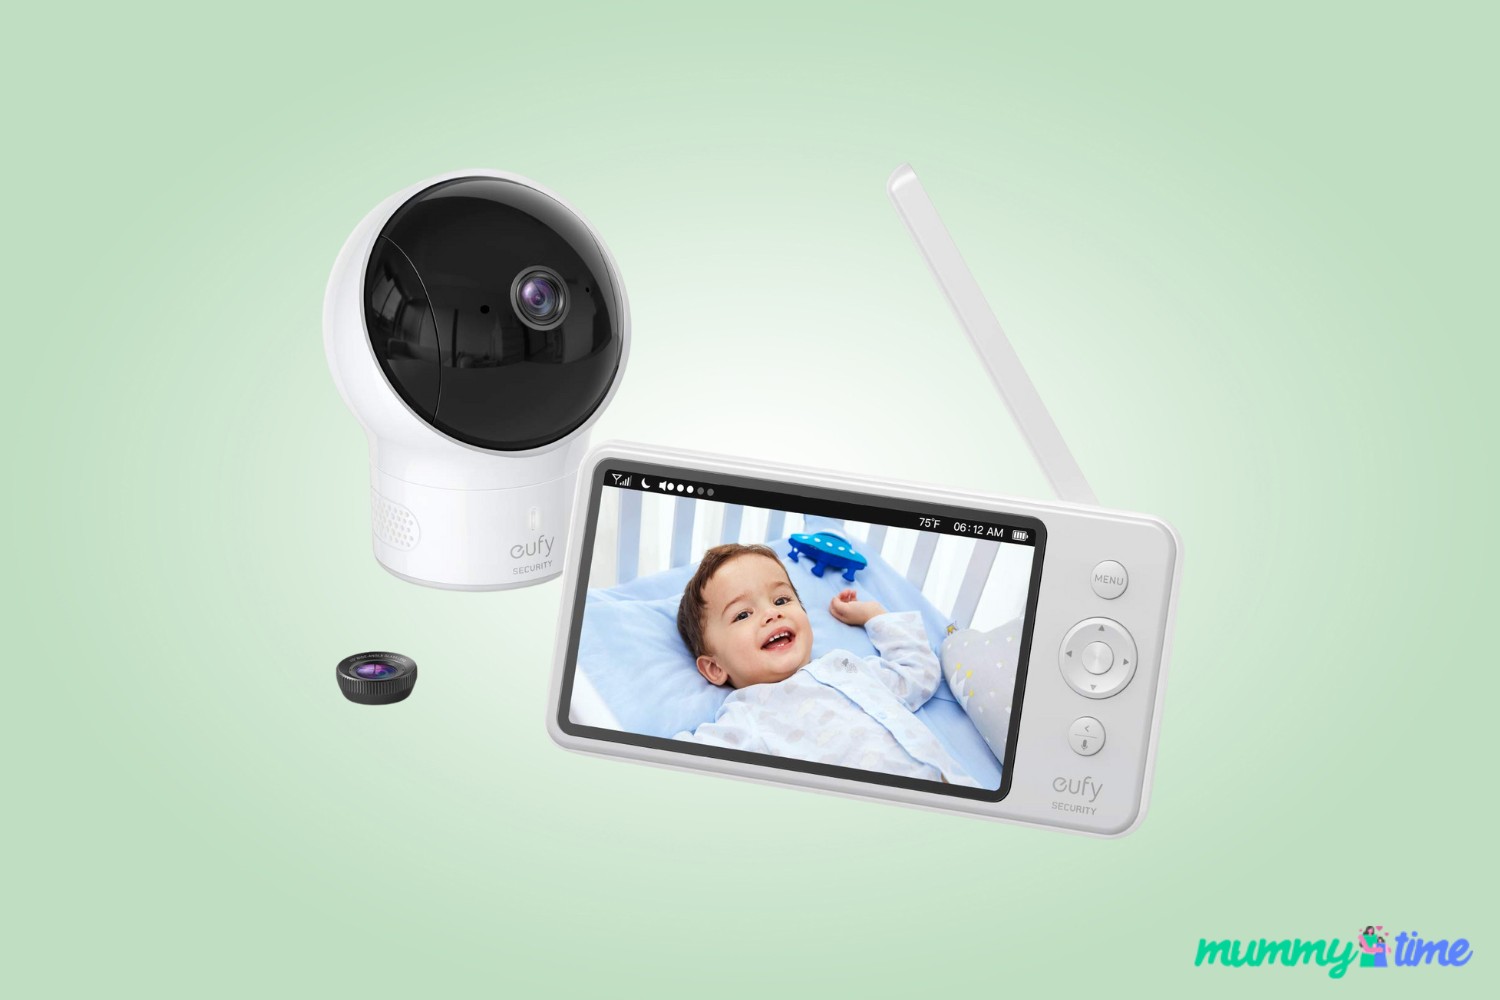 Eufy Video Baby Monitor